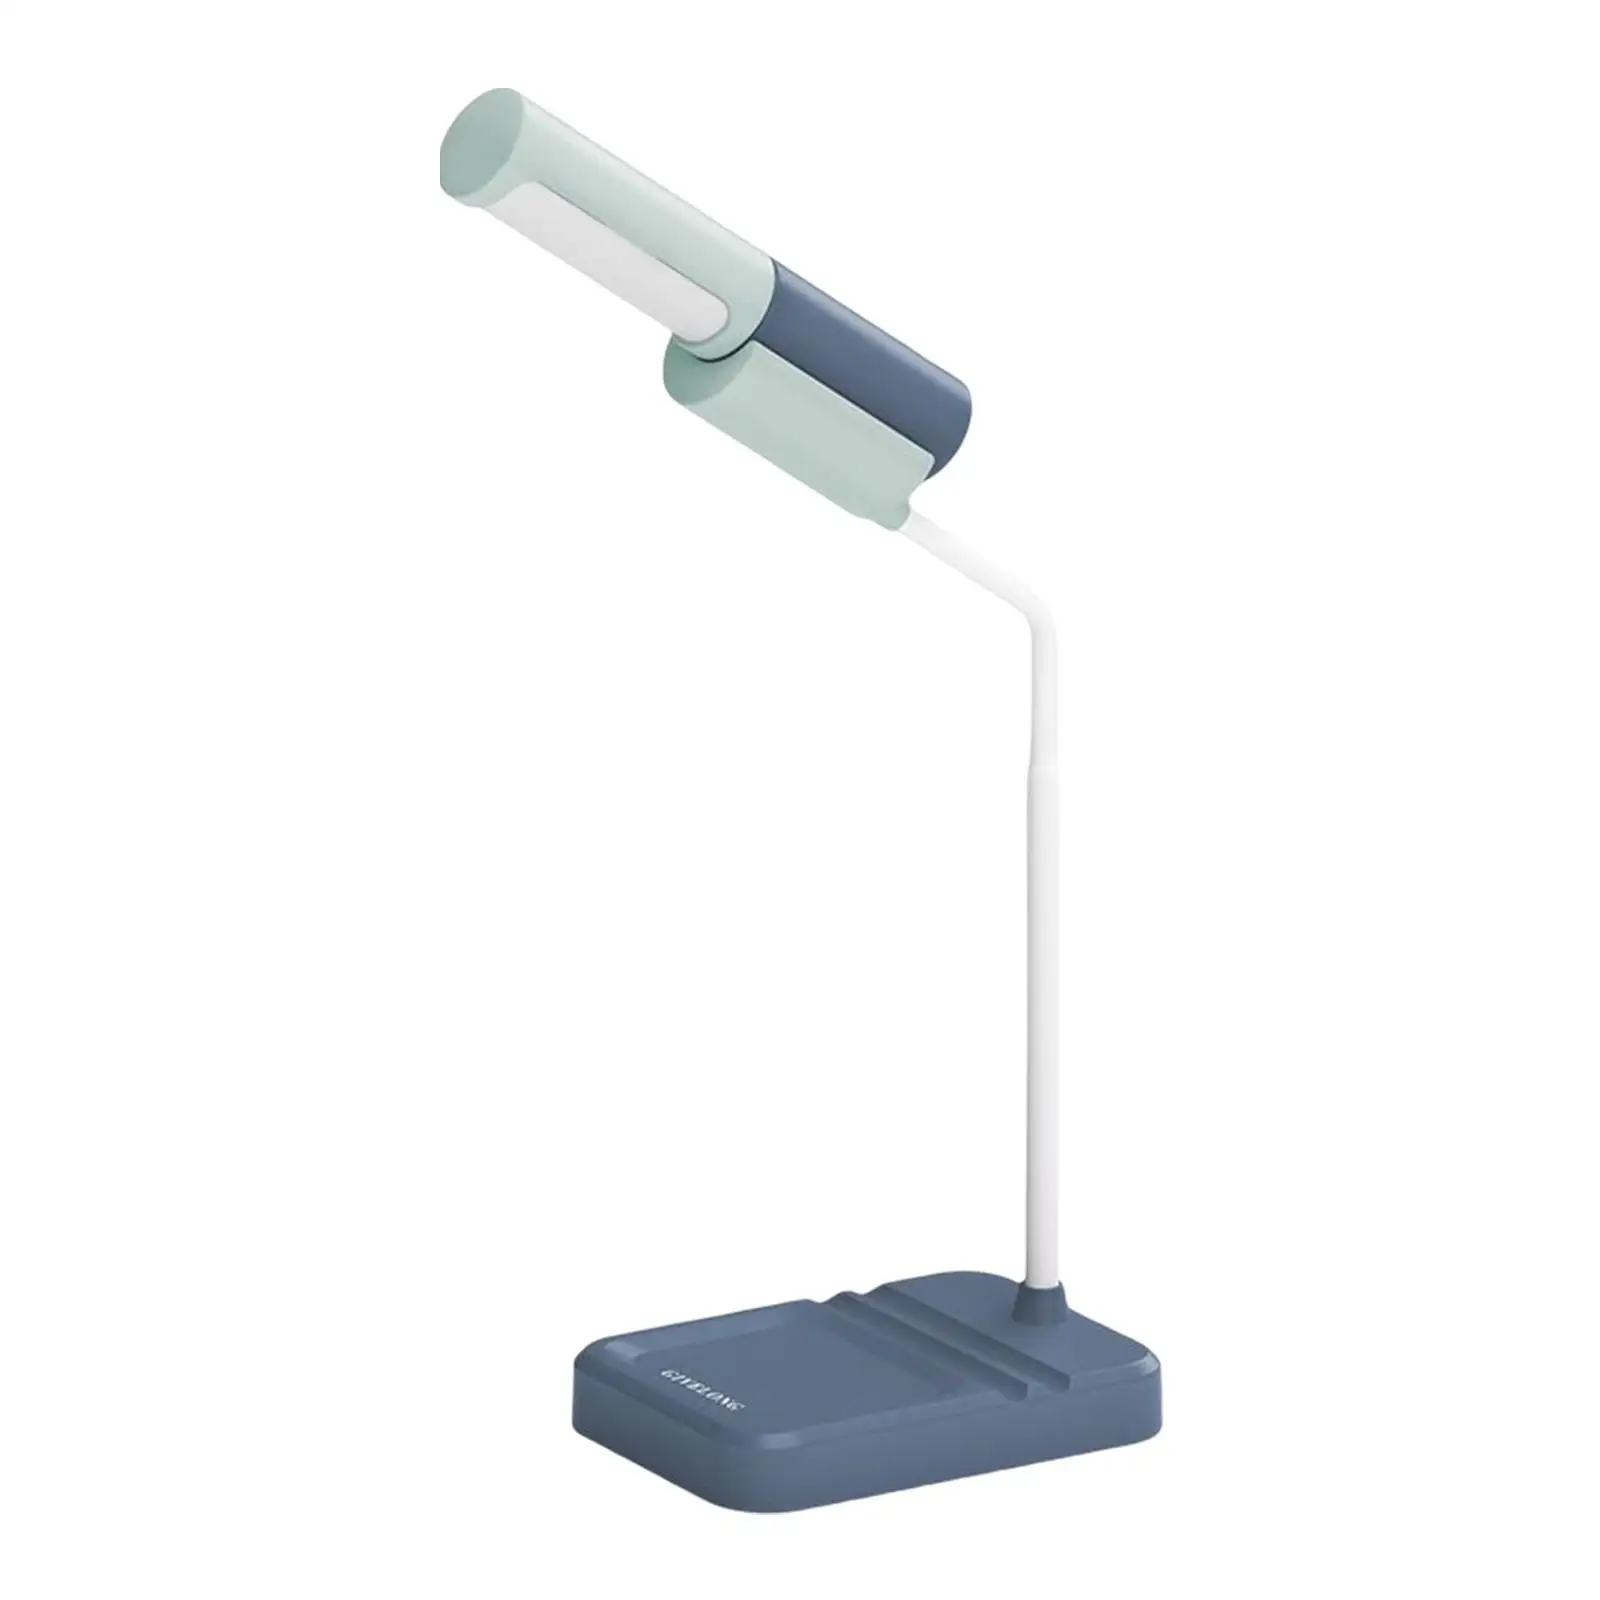 Dimmable LED Desk Lamp Bedside Table Light Rechargeable Eye Caring Handheld Flashlight Reading Lamp for Bedroom Bedside Office